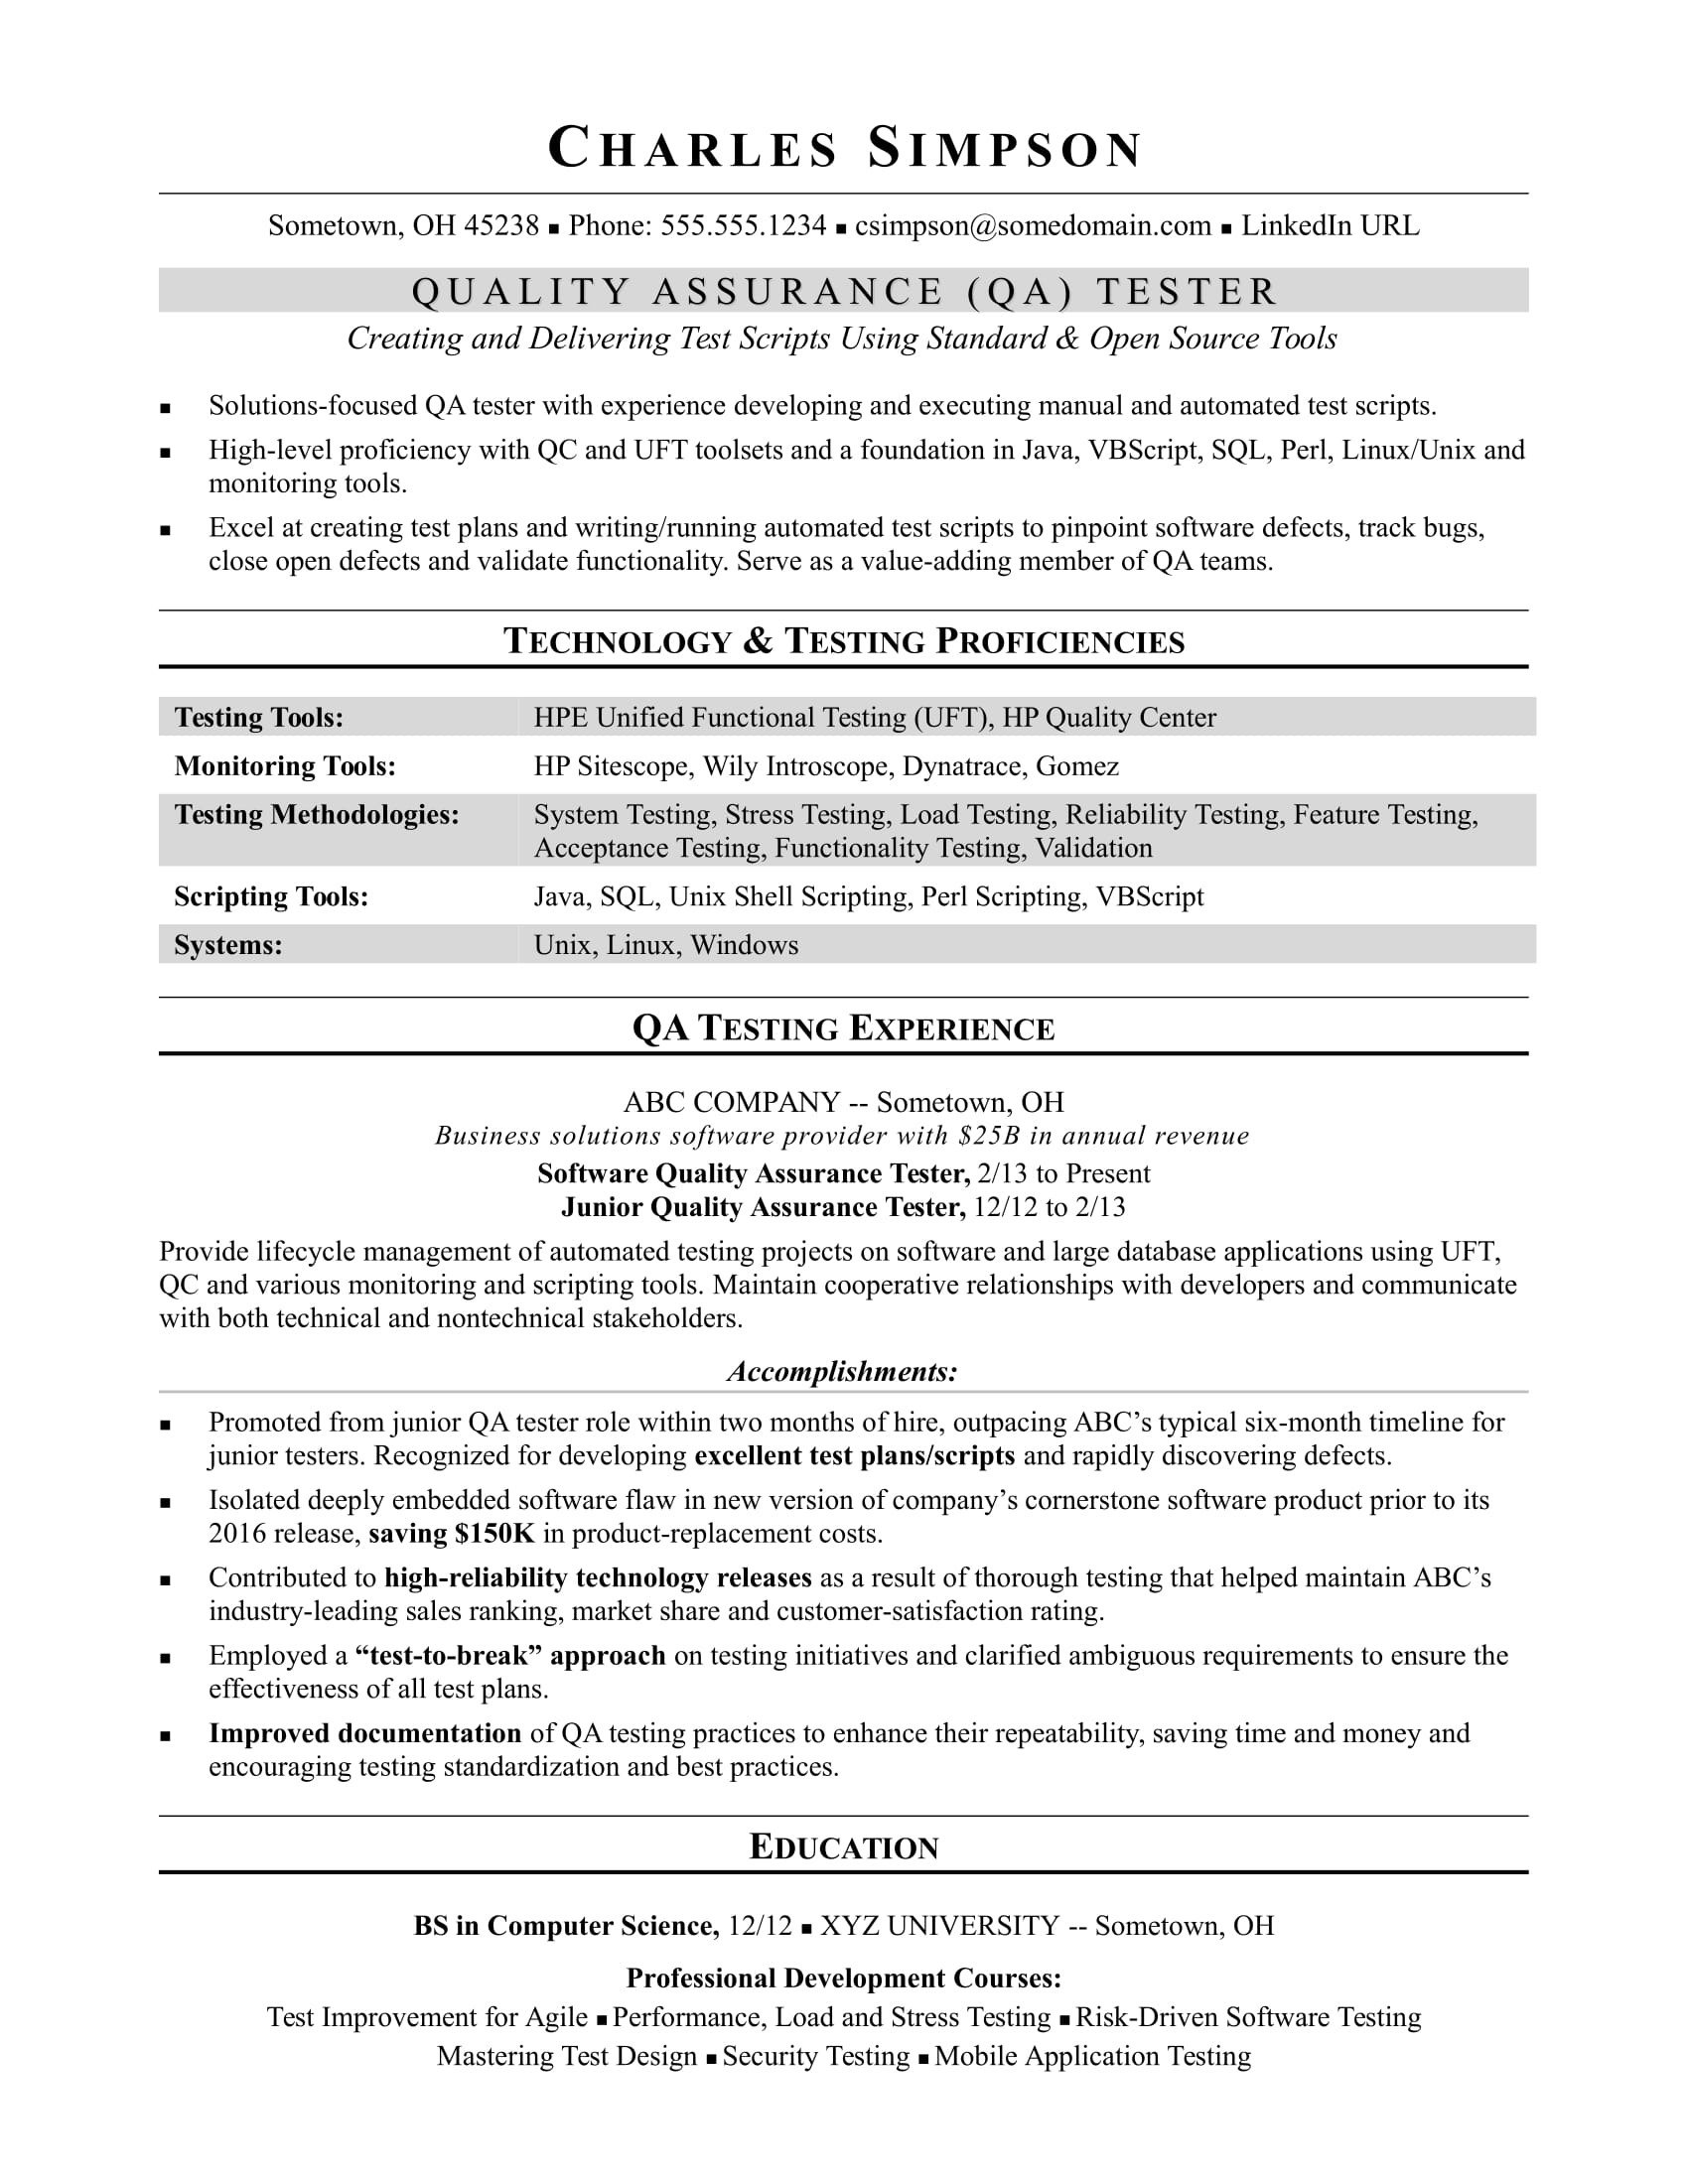 sample resume for a midlevel qa software tester monster com